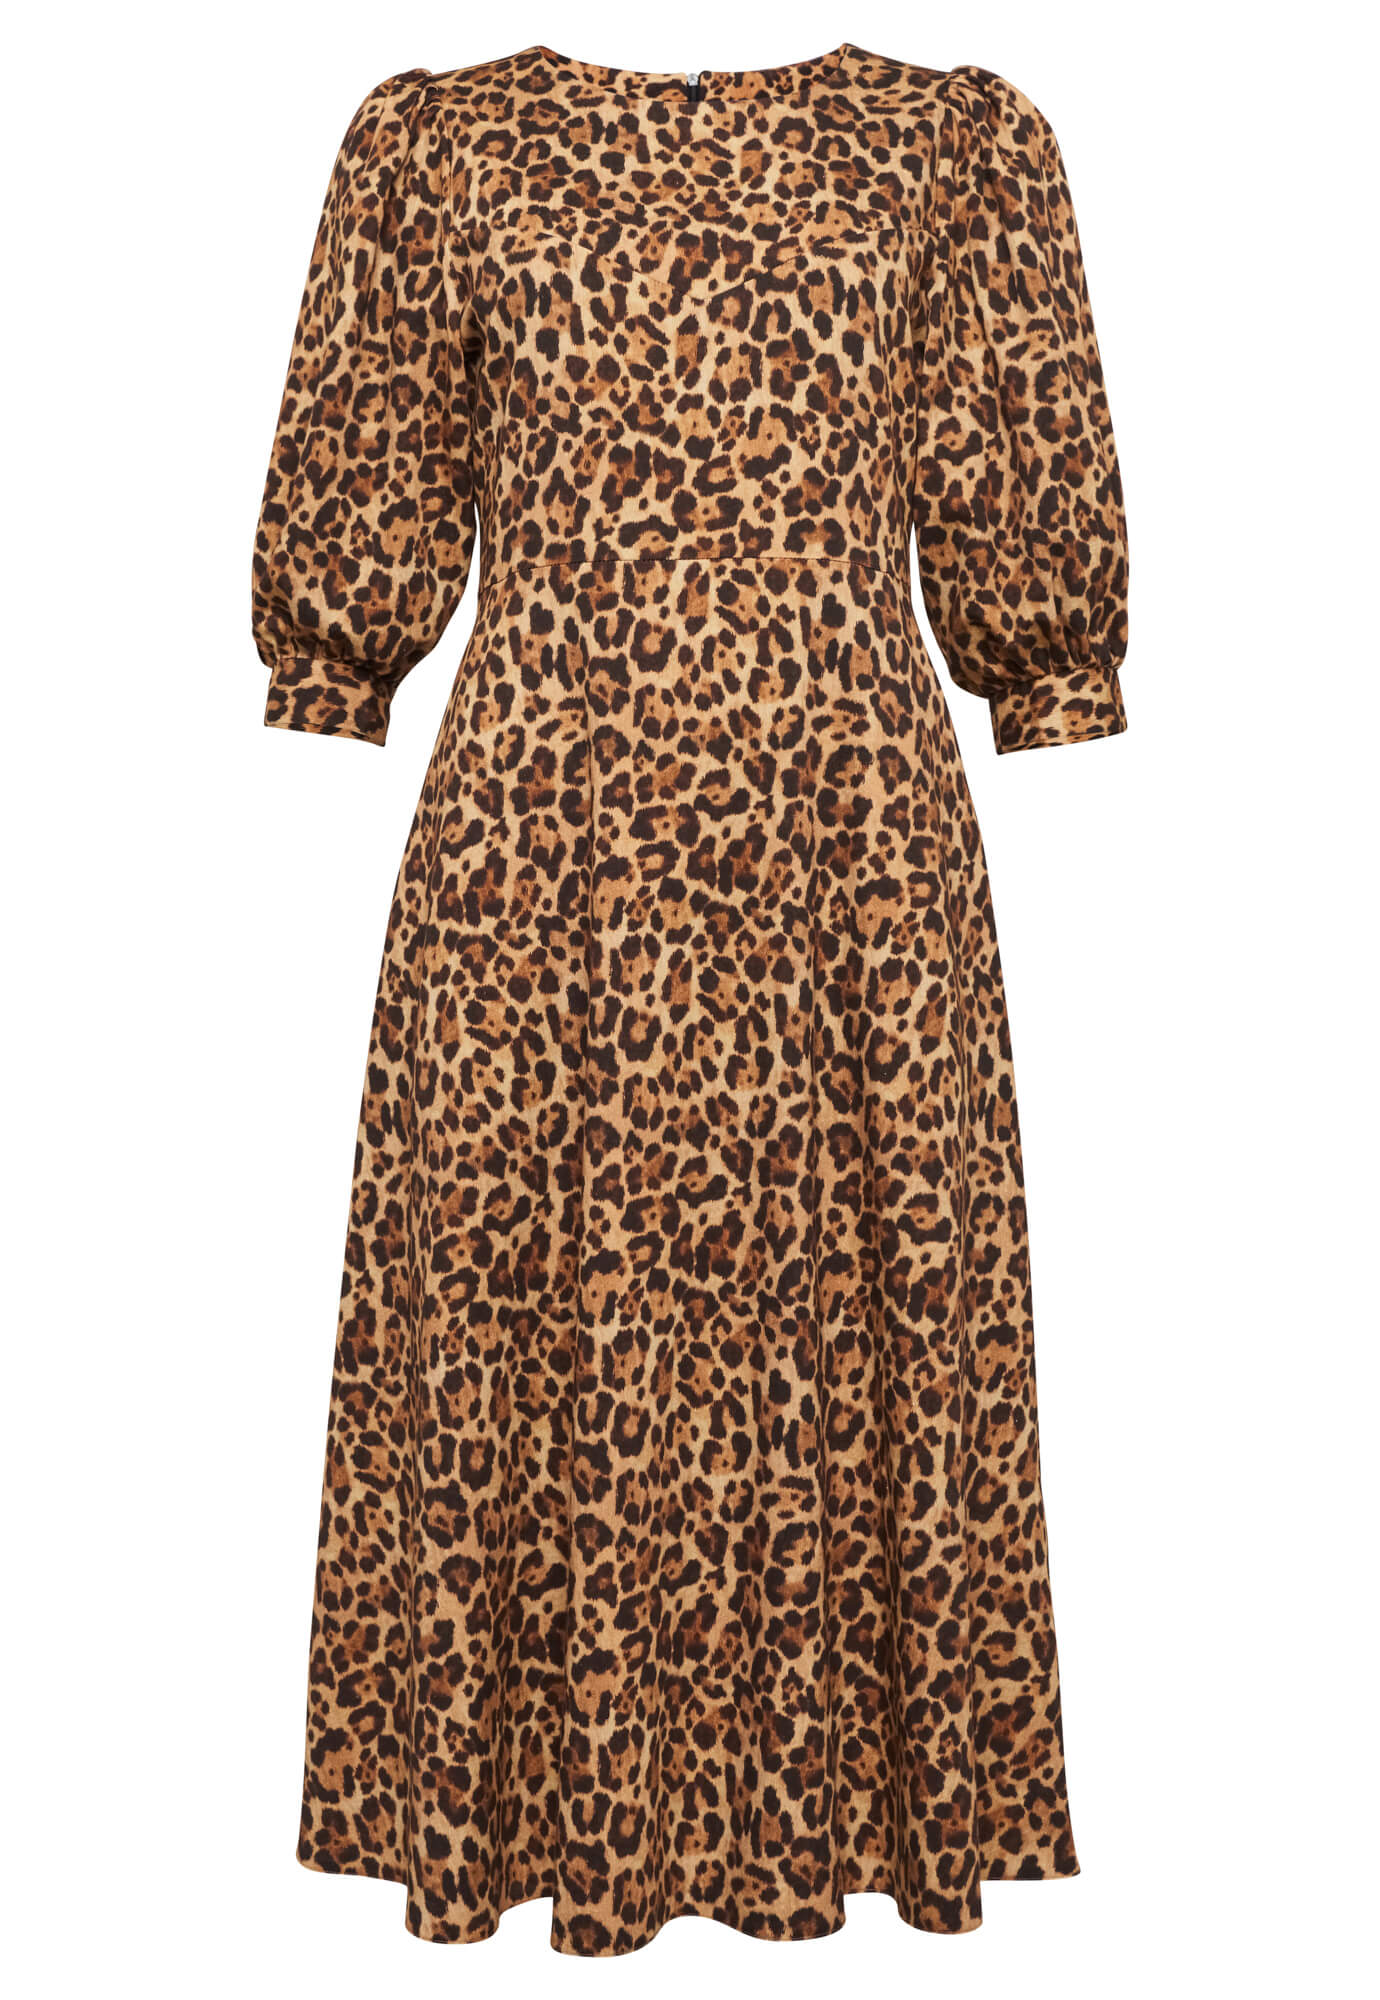 ADDITION Confident Dress leopard S